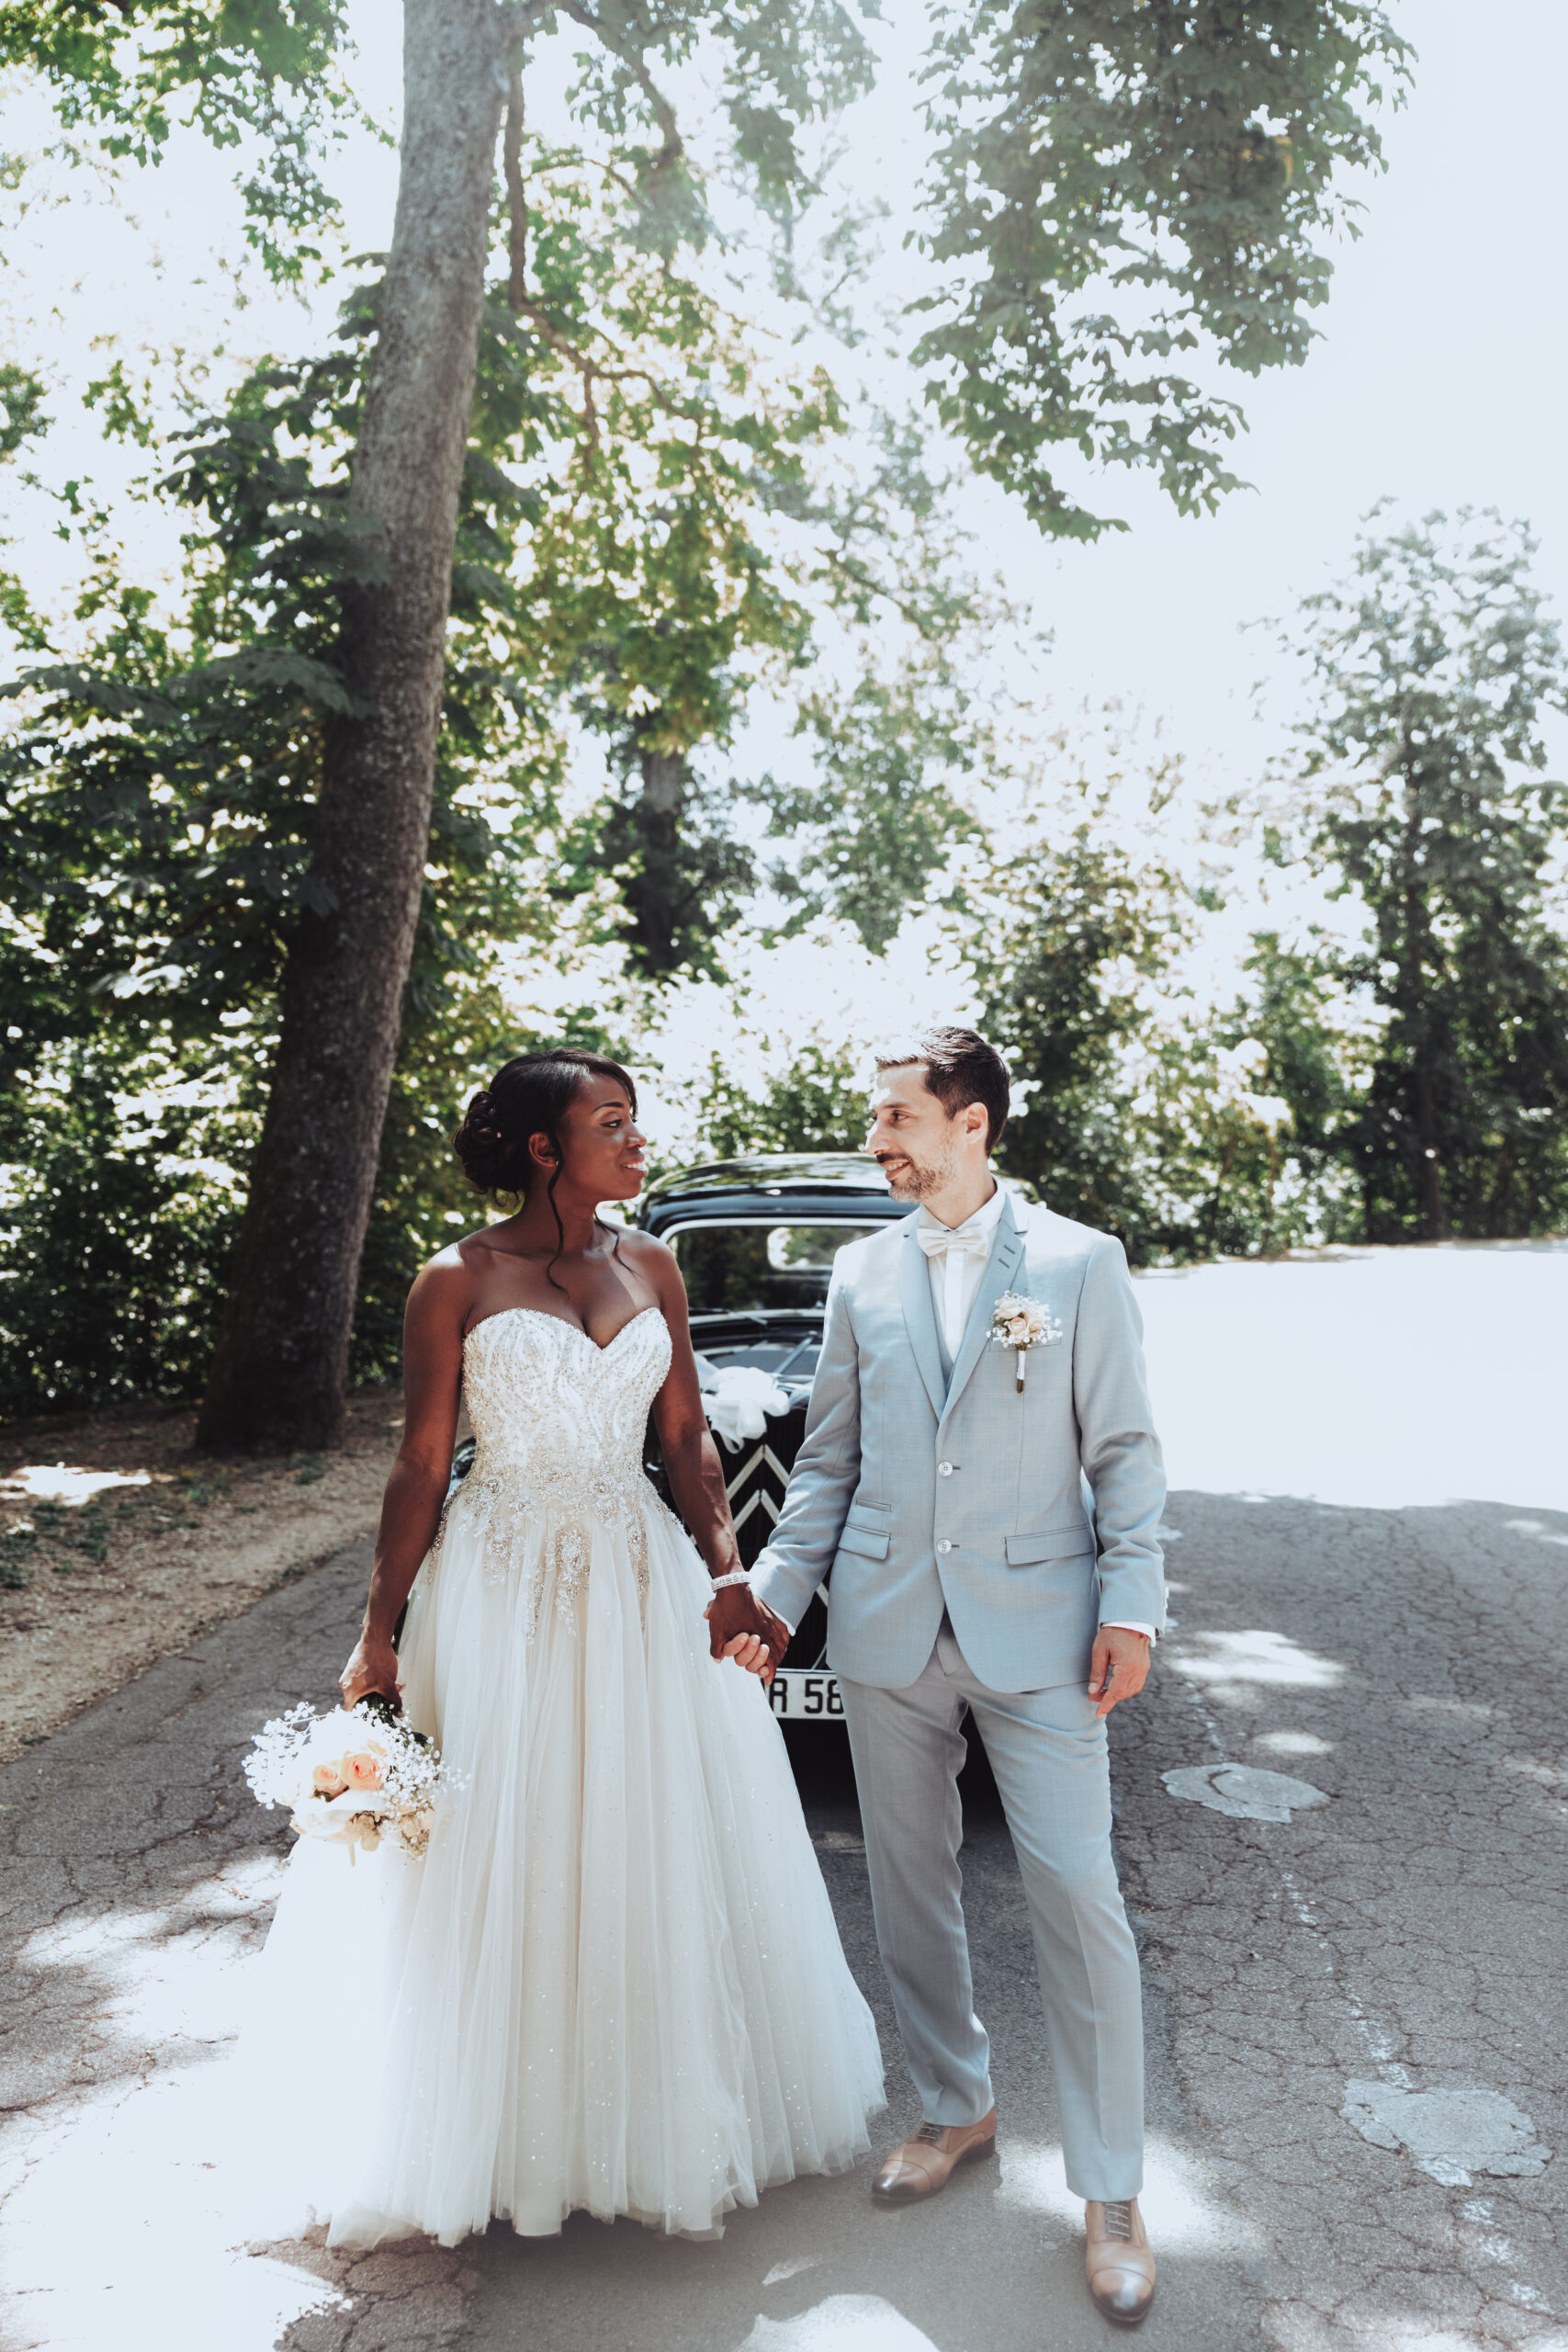 Tiffany hamelin photographe mariage lyon